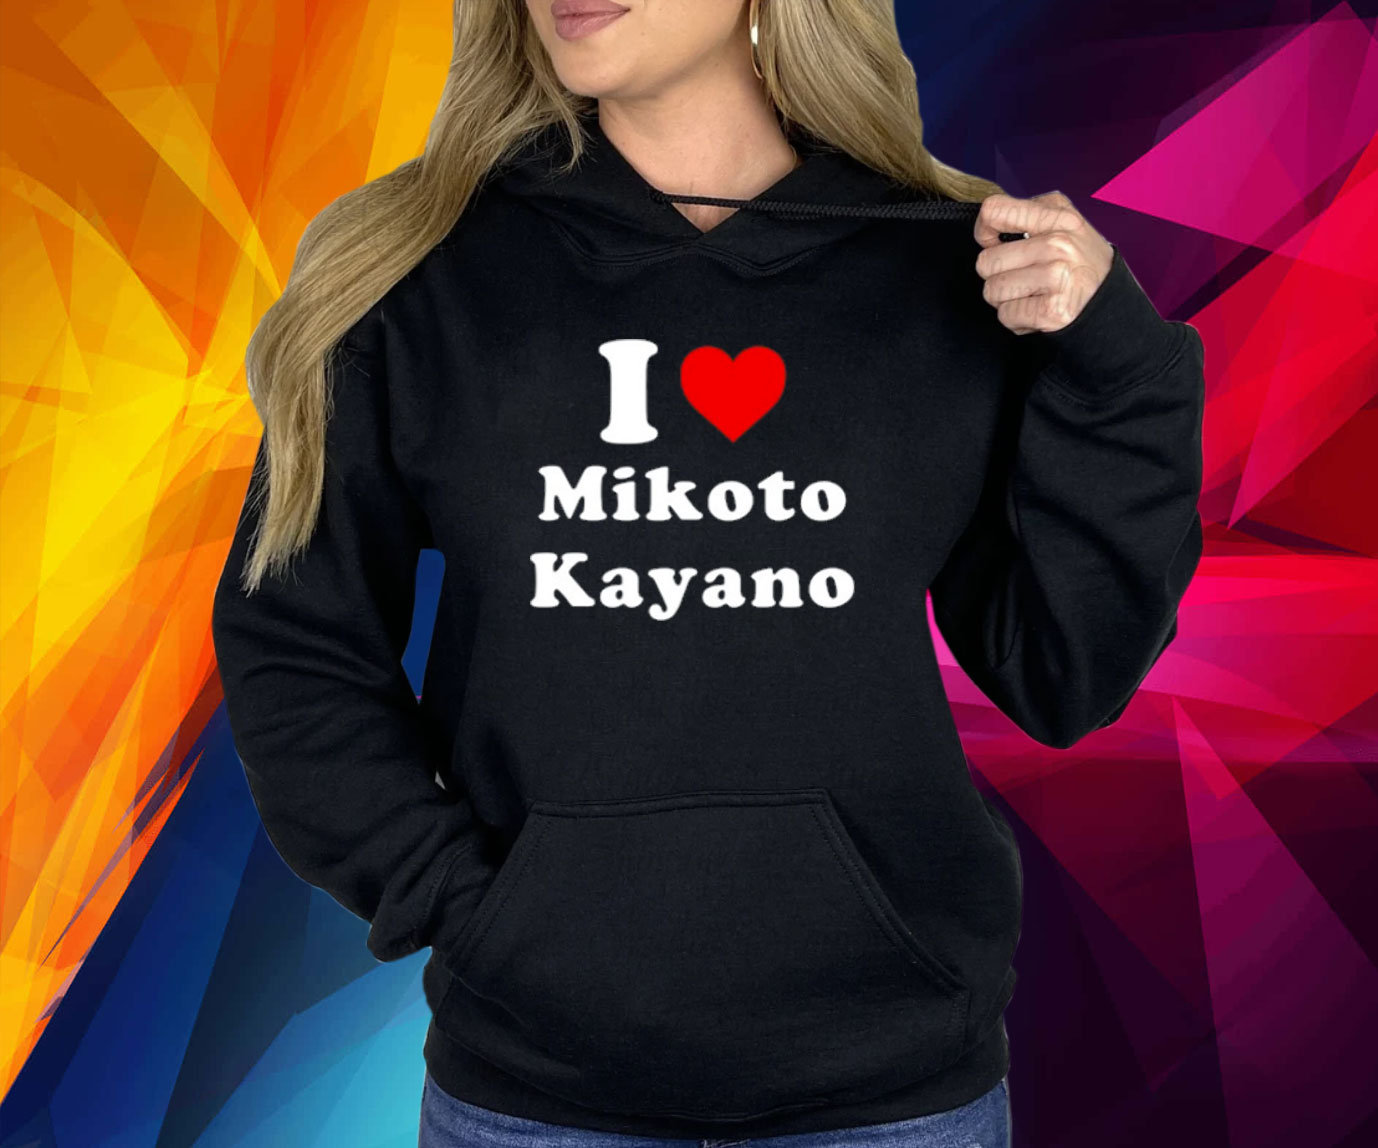 I Love Mikoto Kayano Shirt